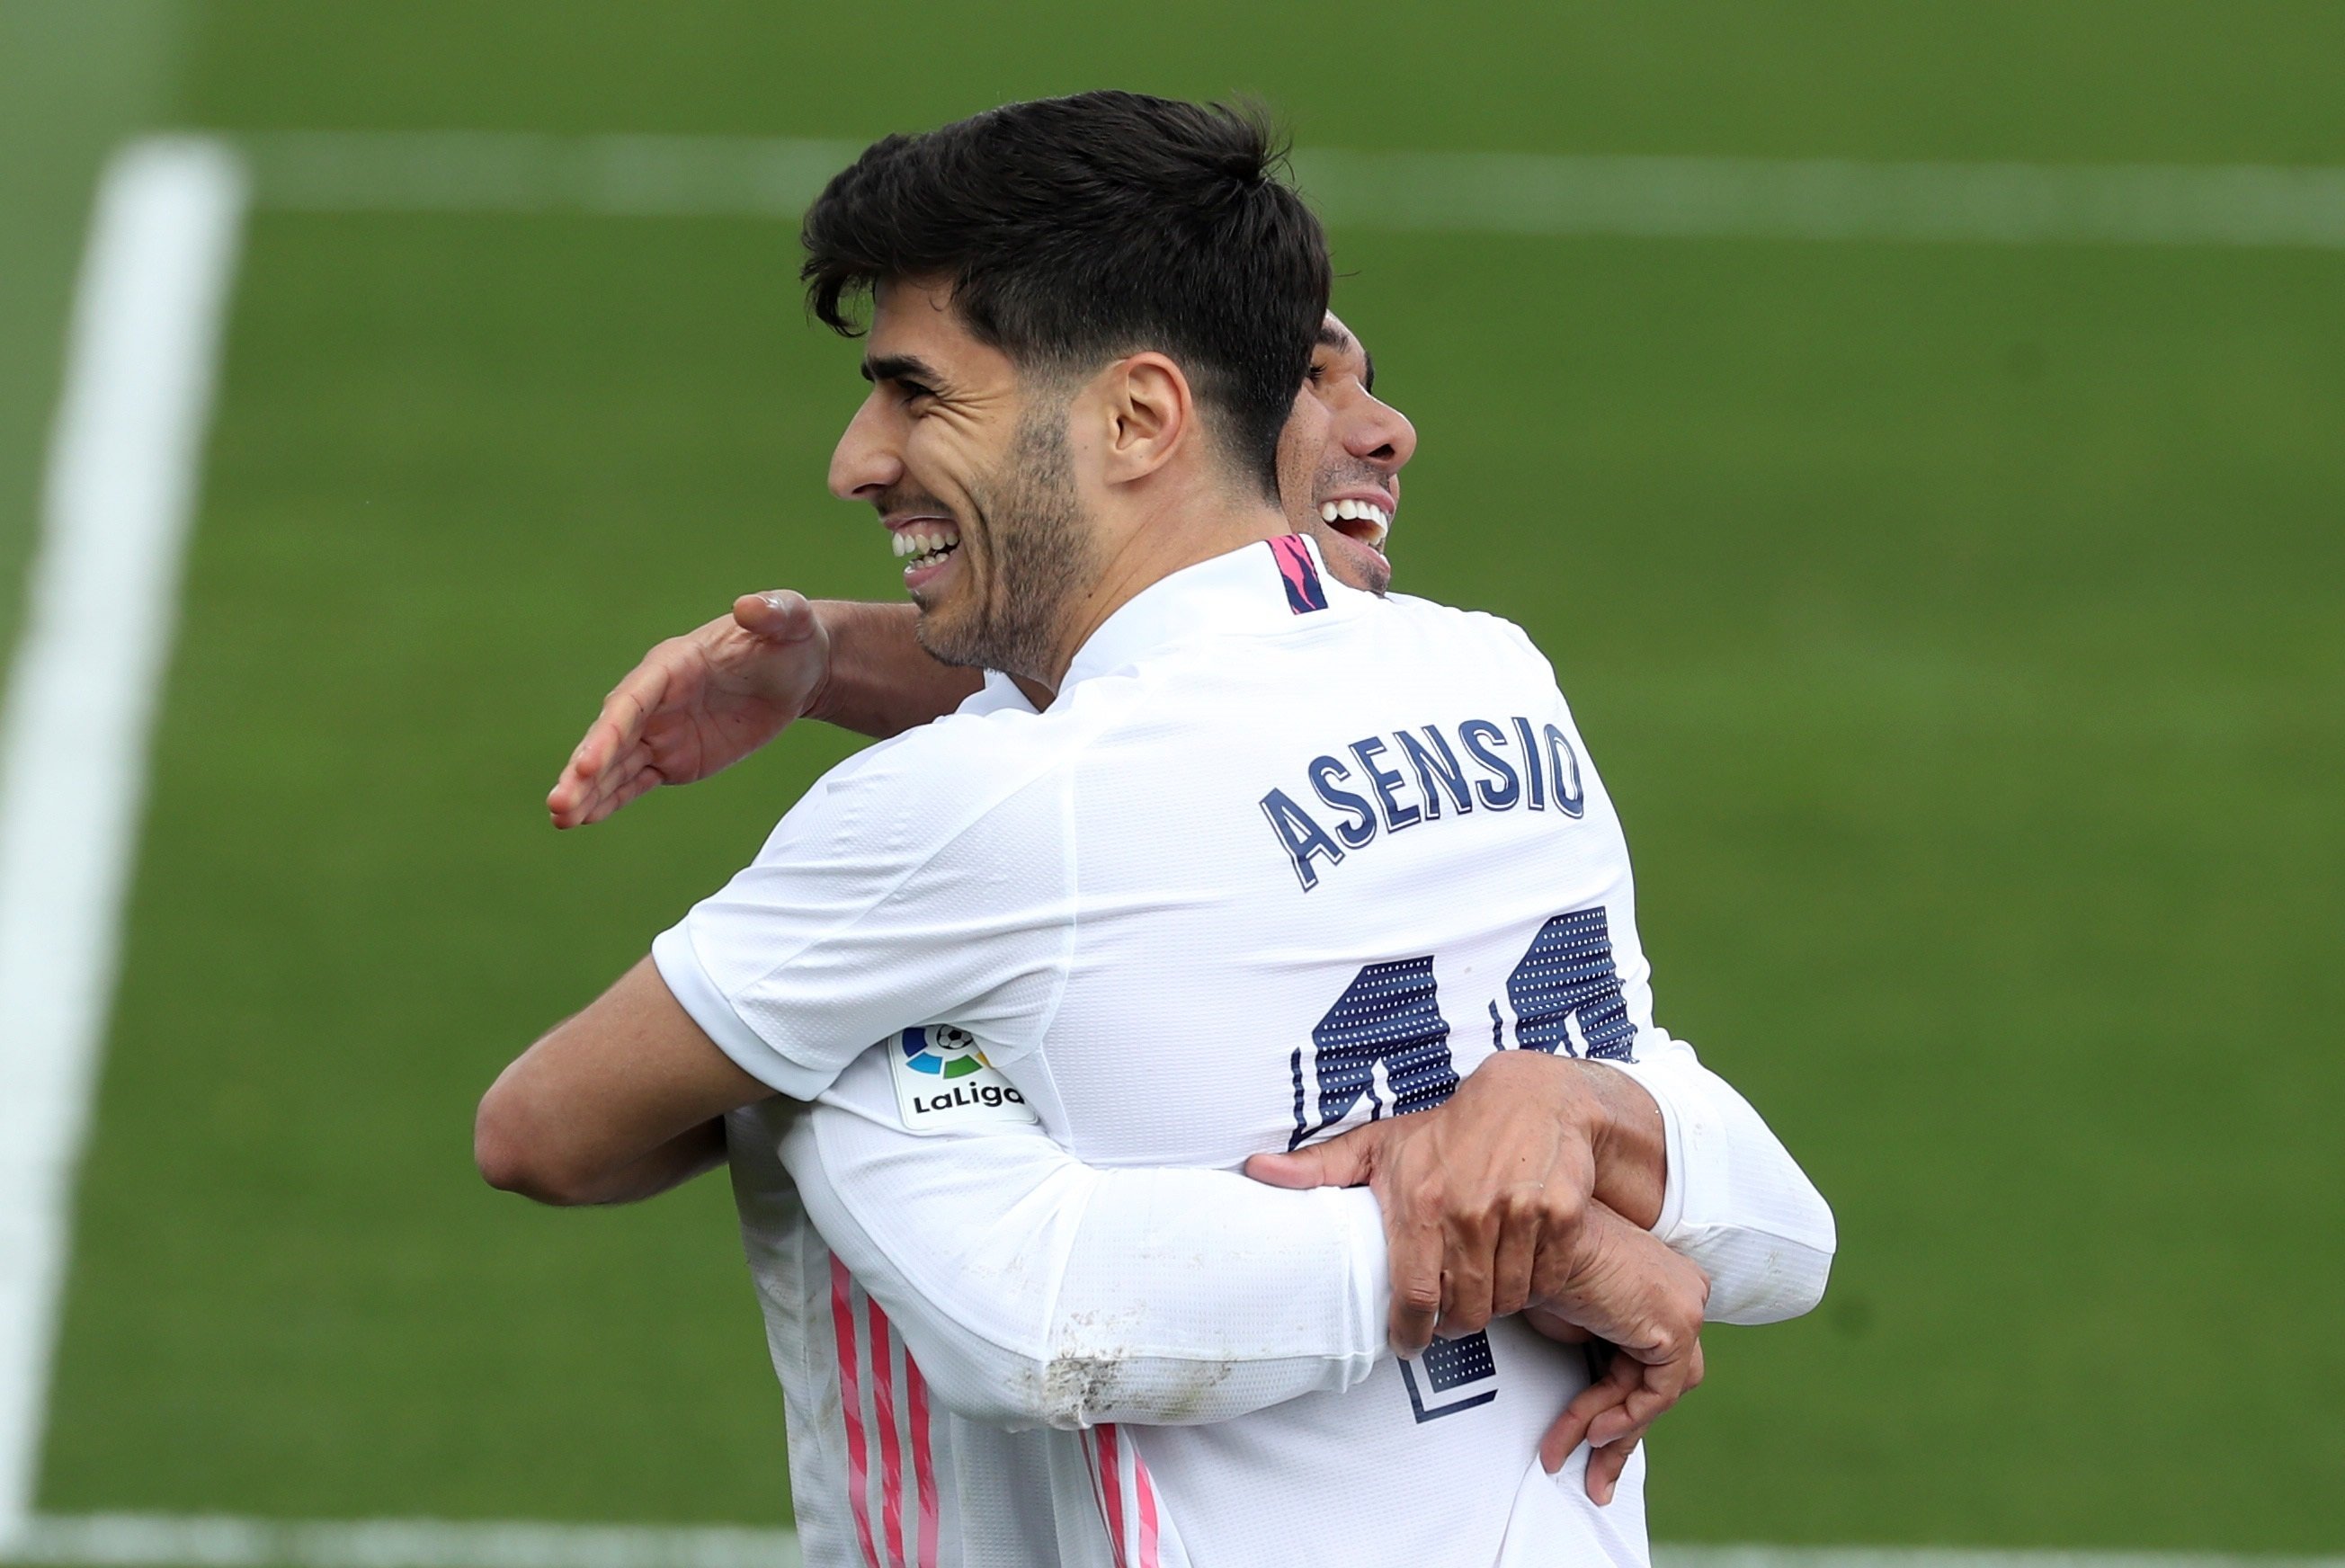 Asensio i Benzema calmen la tempesta contra l'Eibar (2-0)